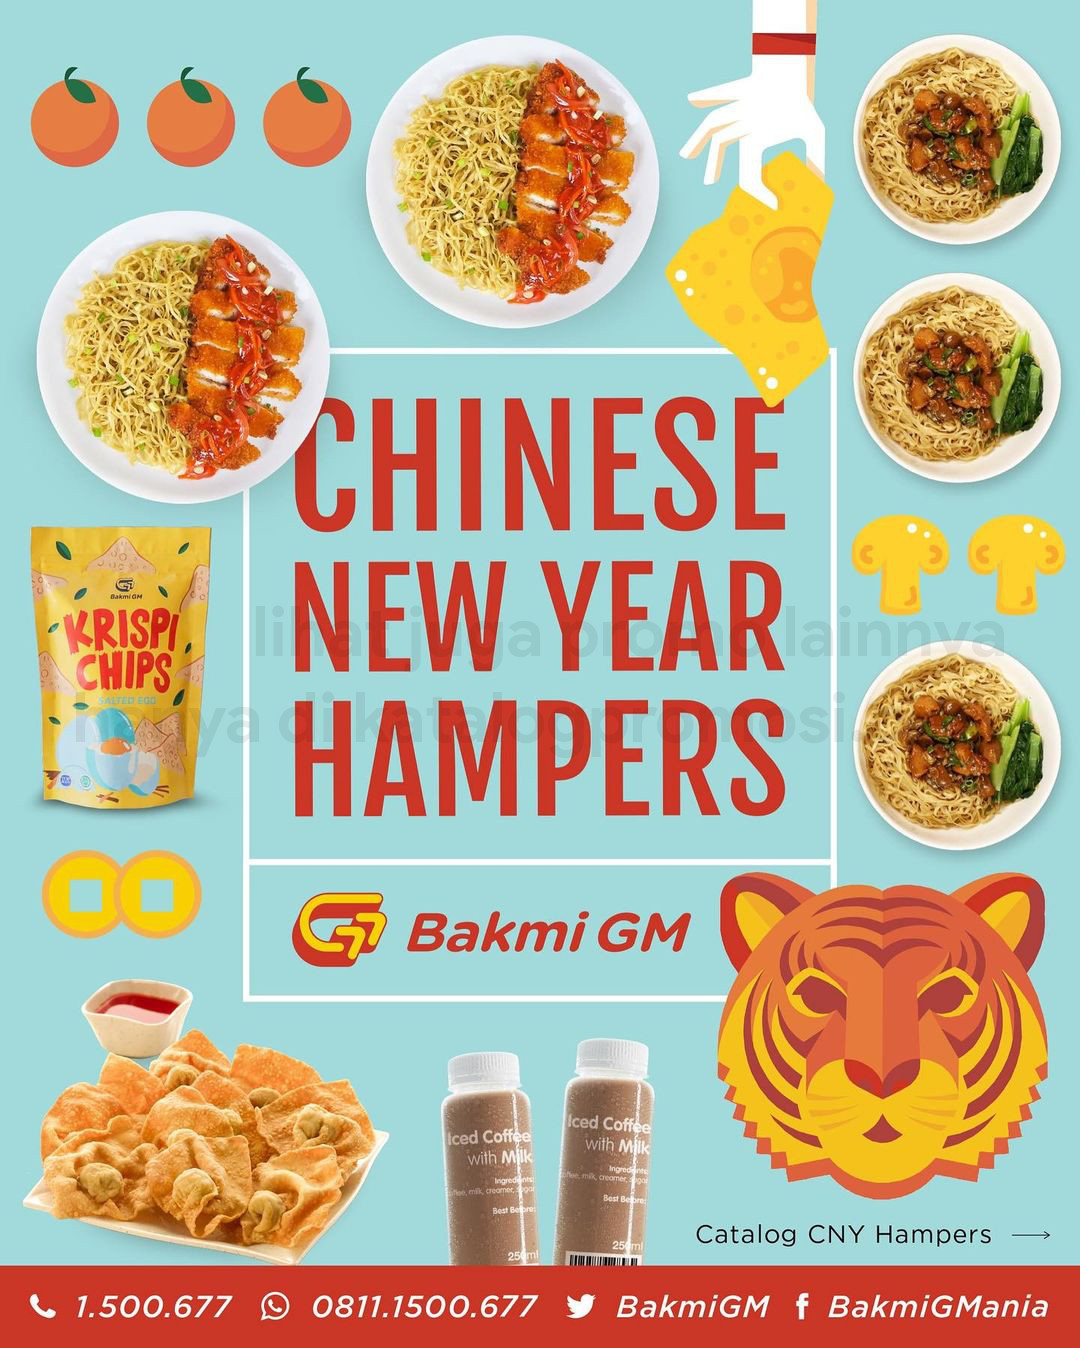 BAKMI GM Promo Chinese New Year Hampers - Harga Spesial mulai Rp 127.274,-